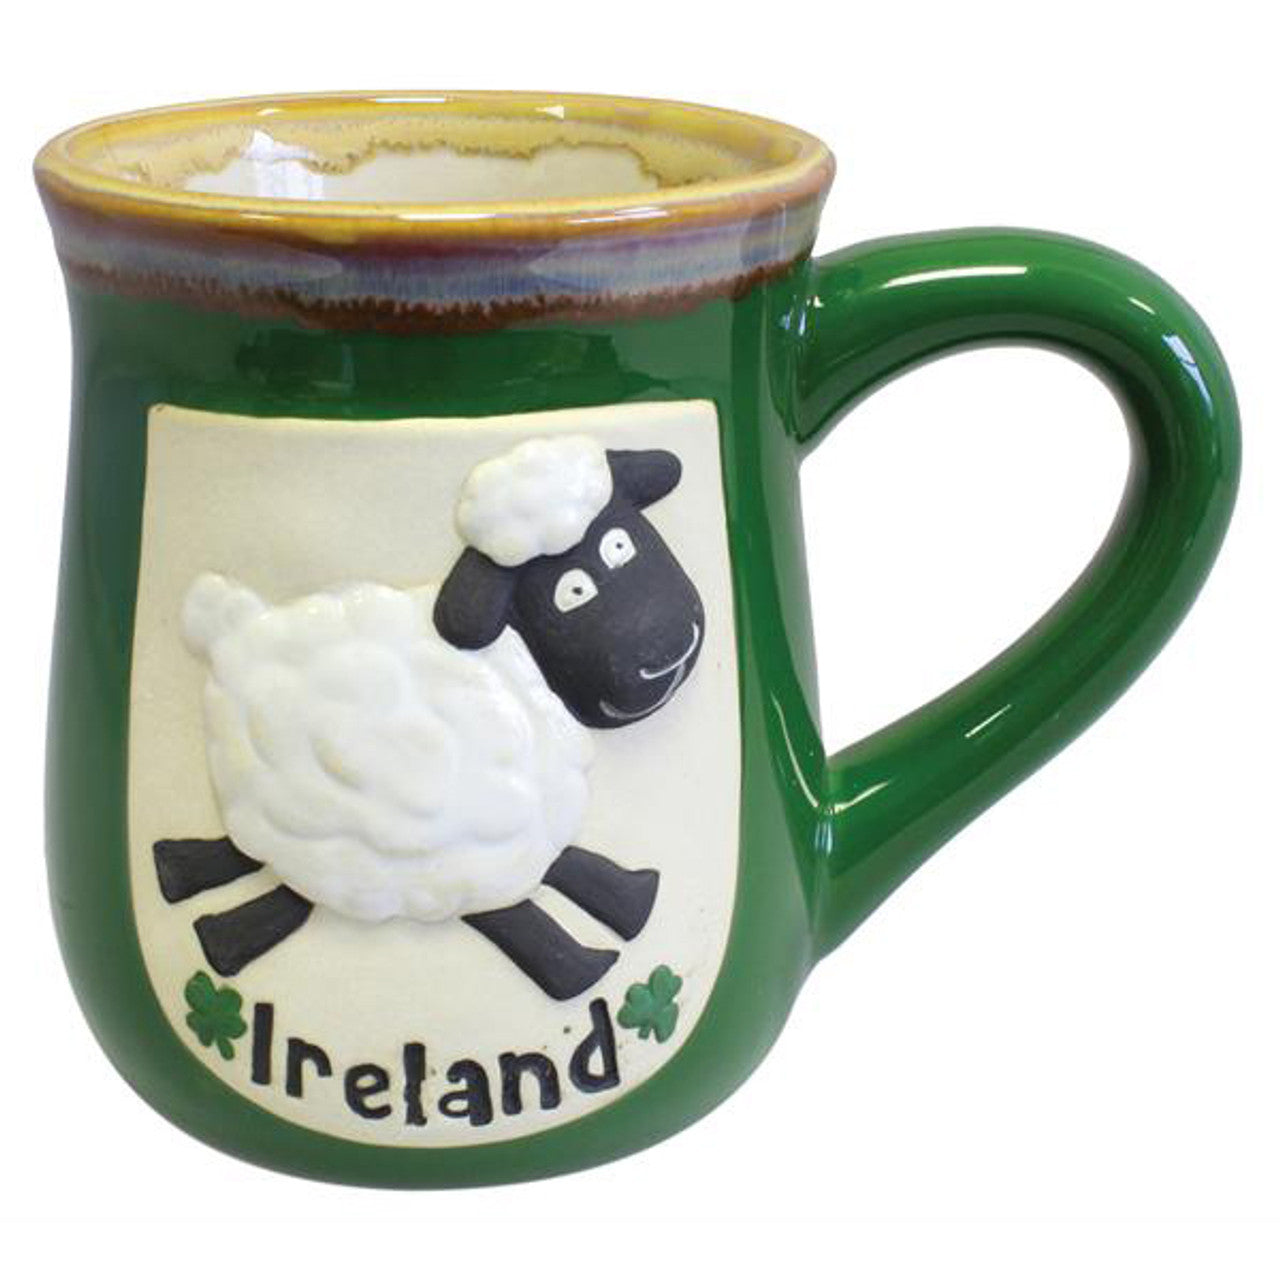 Ireland Sheep Pottery Mug